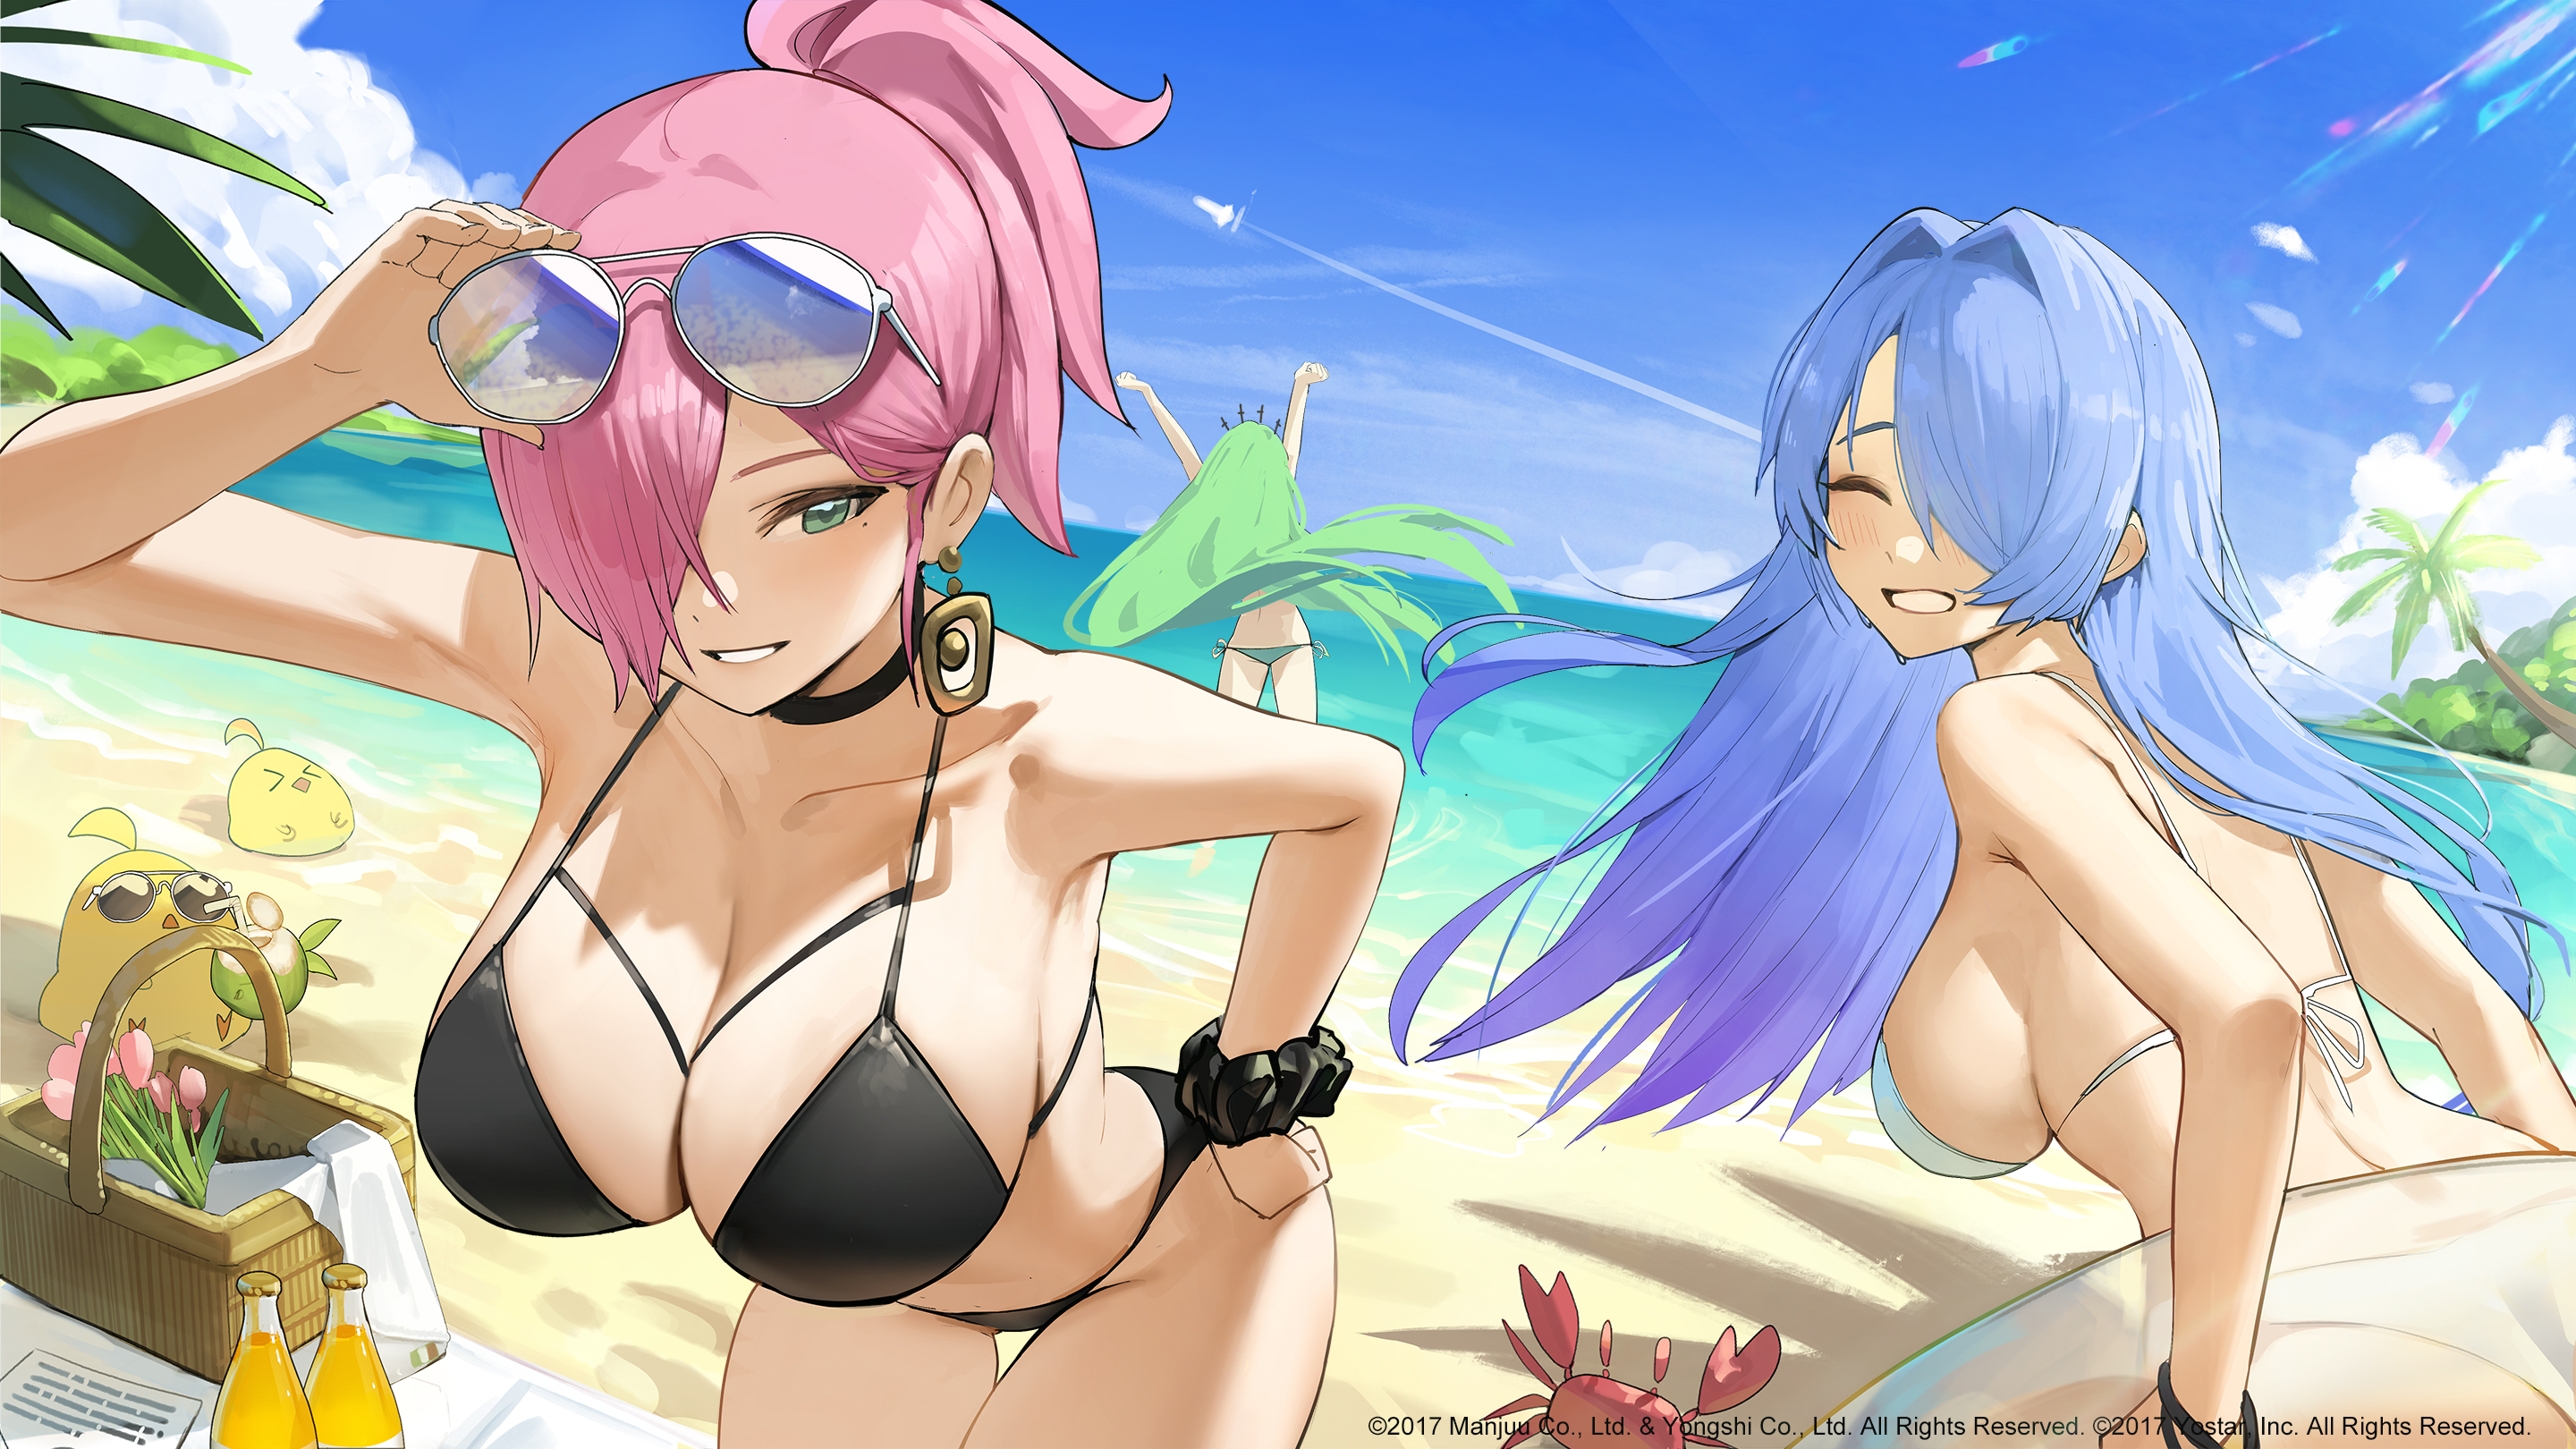 Anime 2880x1620 anime anime girls sunglasses bikini big boobs beach sideboob floater hair over one eye pink hair green hair blue hair crabs Azur Lane palm trees picnic basket